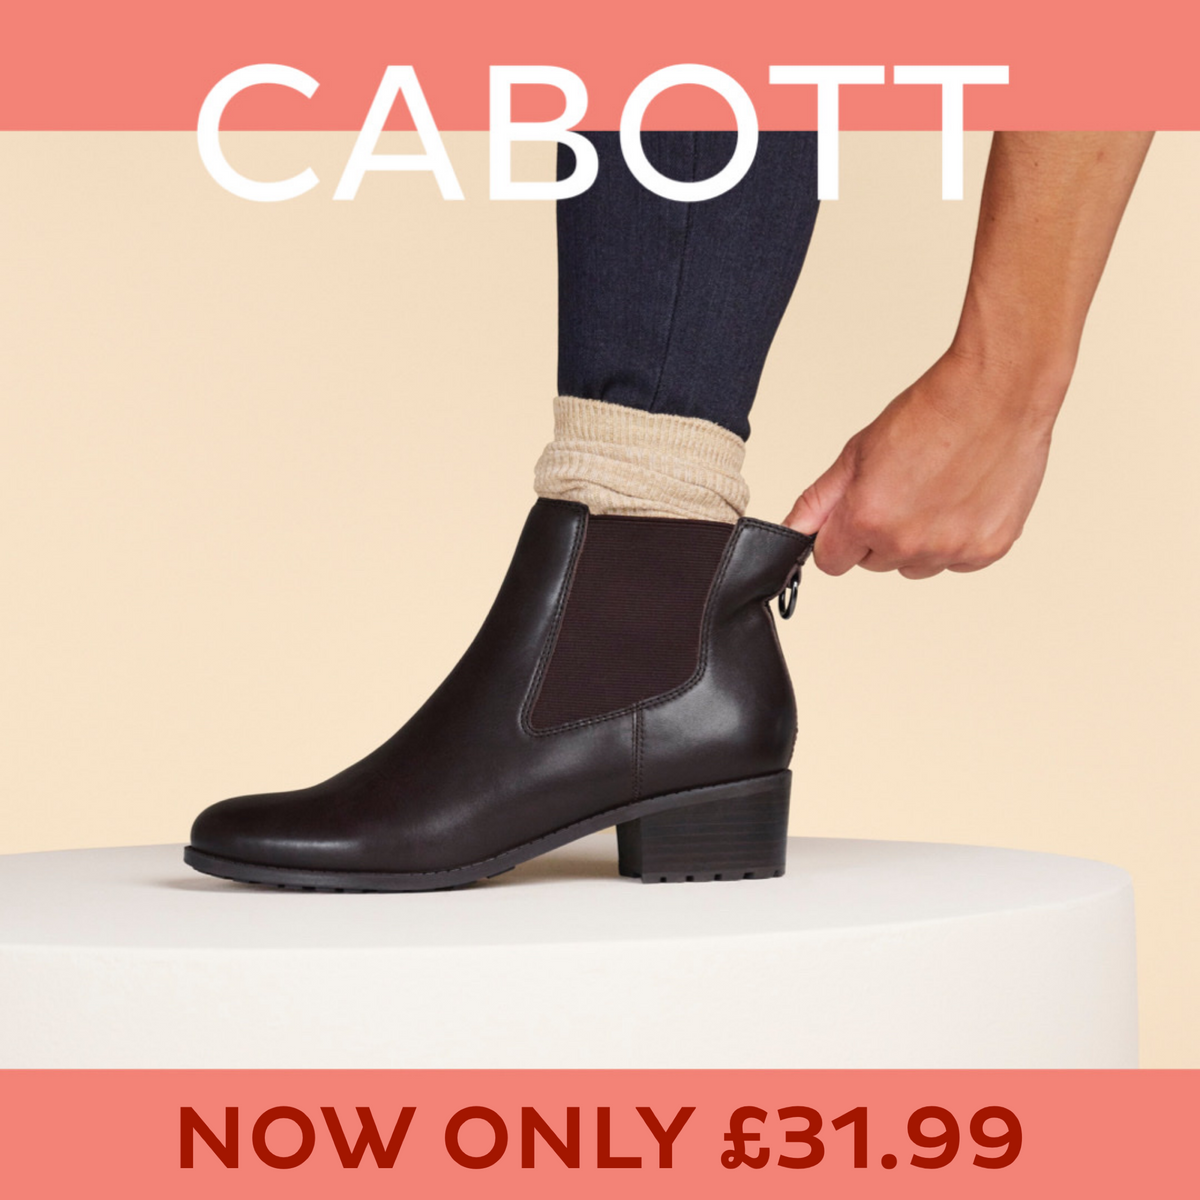 Shop Cabot Boots at Easy Spirit UK